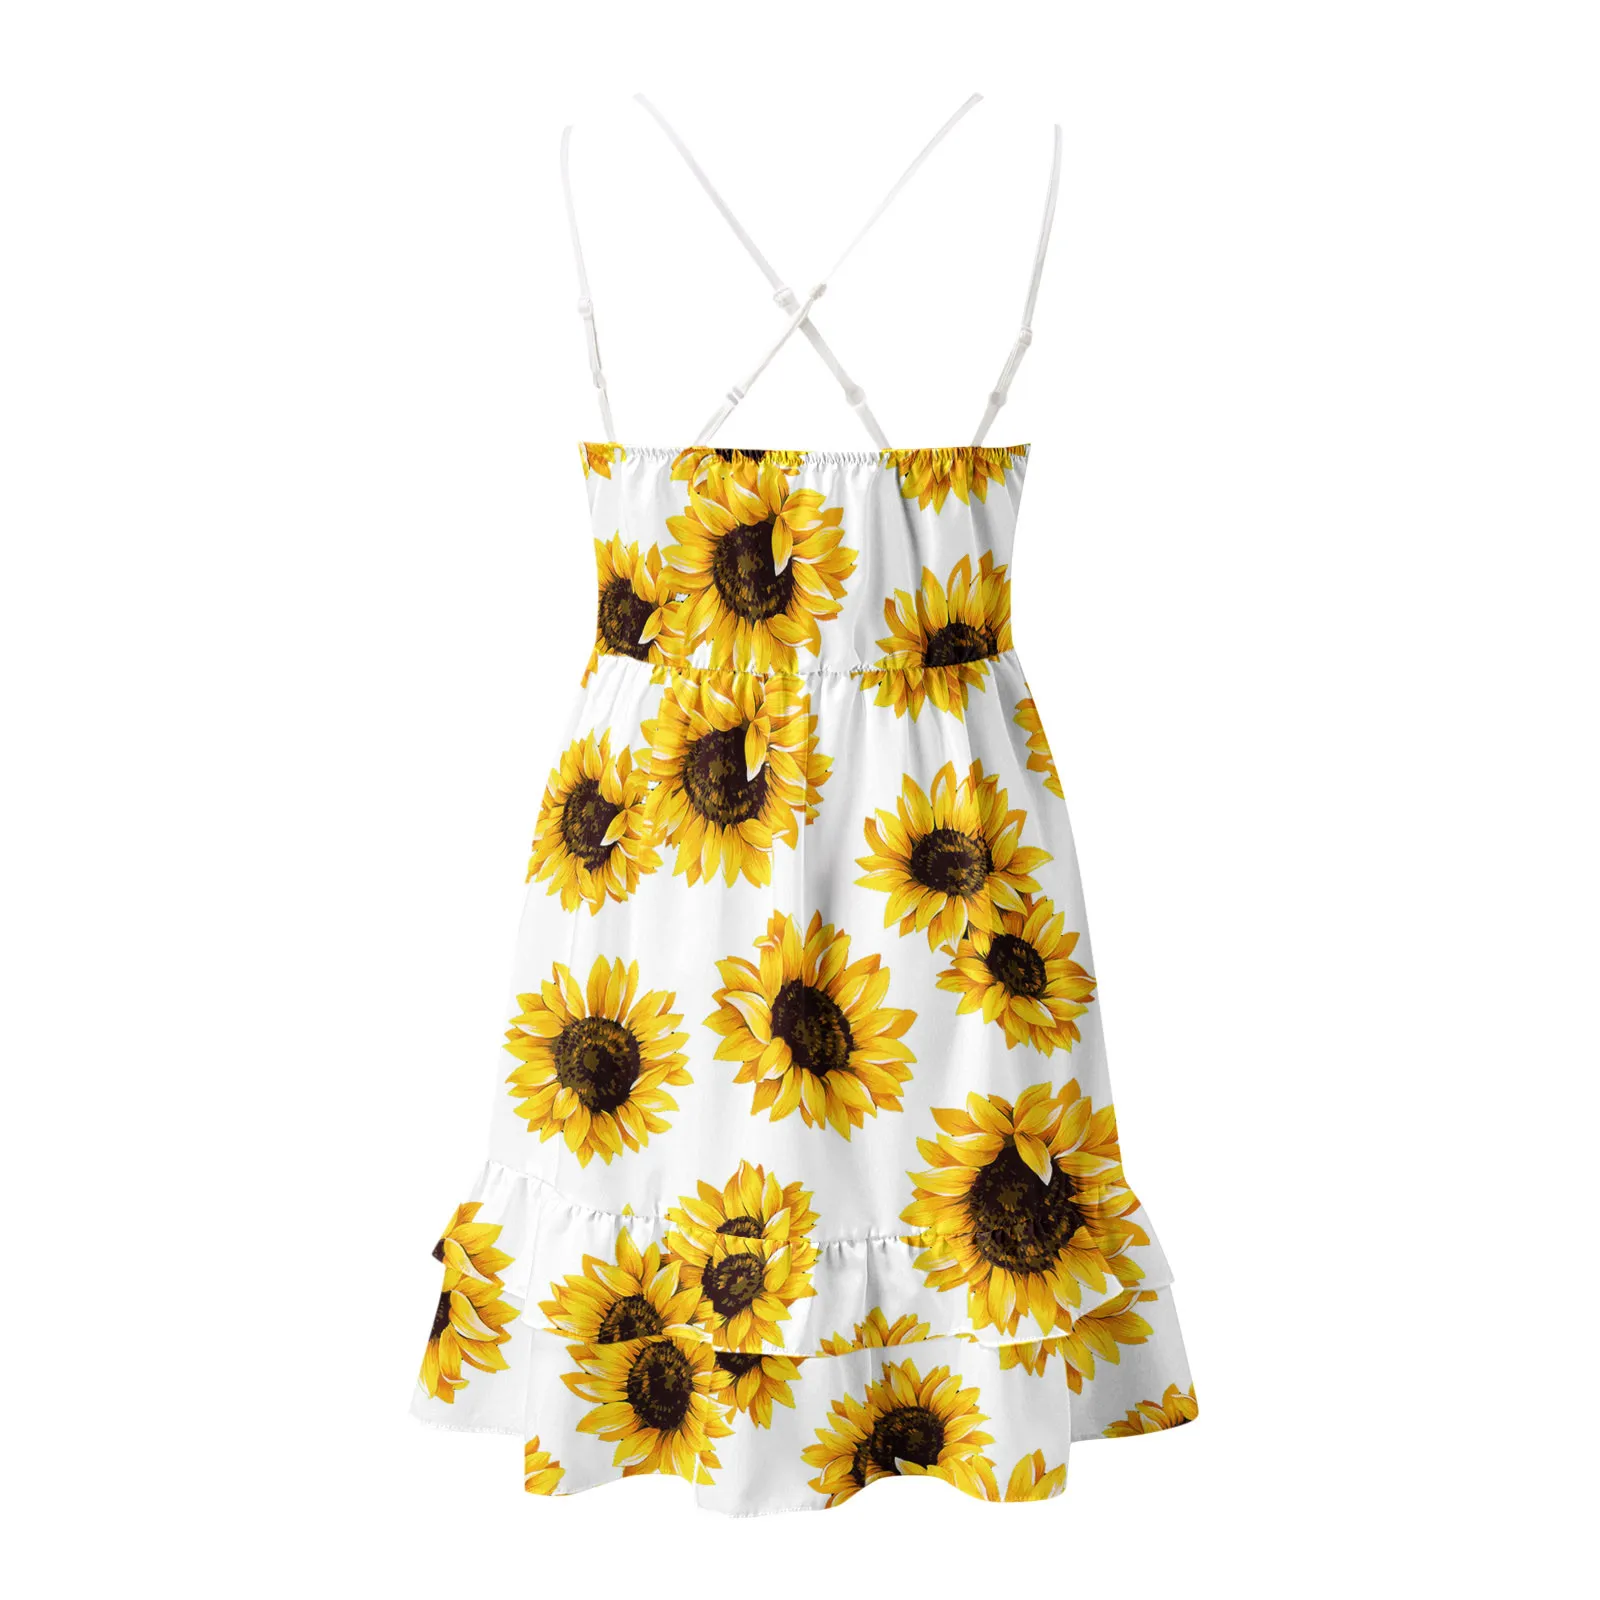 2022 Summer Deep V Neck Sunflower Print Lace Crochet Sleeveless Dress Women's Clothing Casual Party Sexy Beach Loose Sling Dress 6